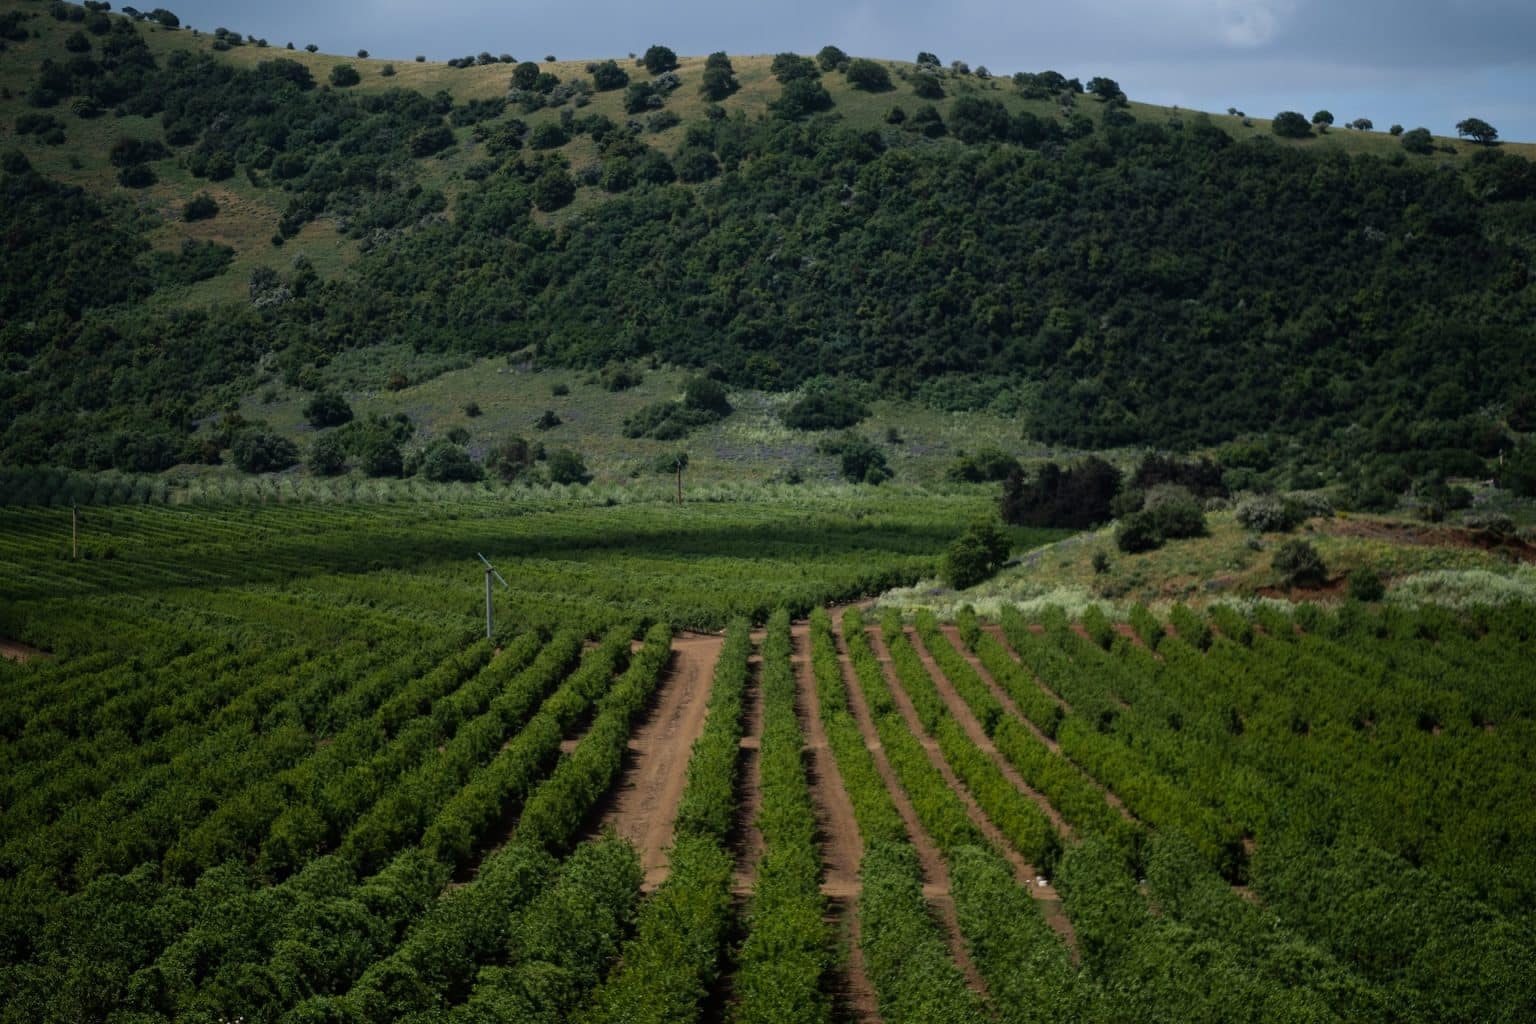 Golan Heights vineyards, Northern Israel